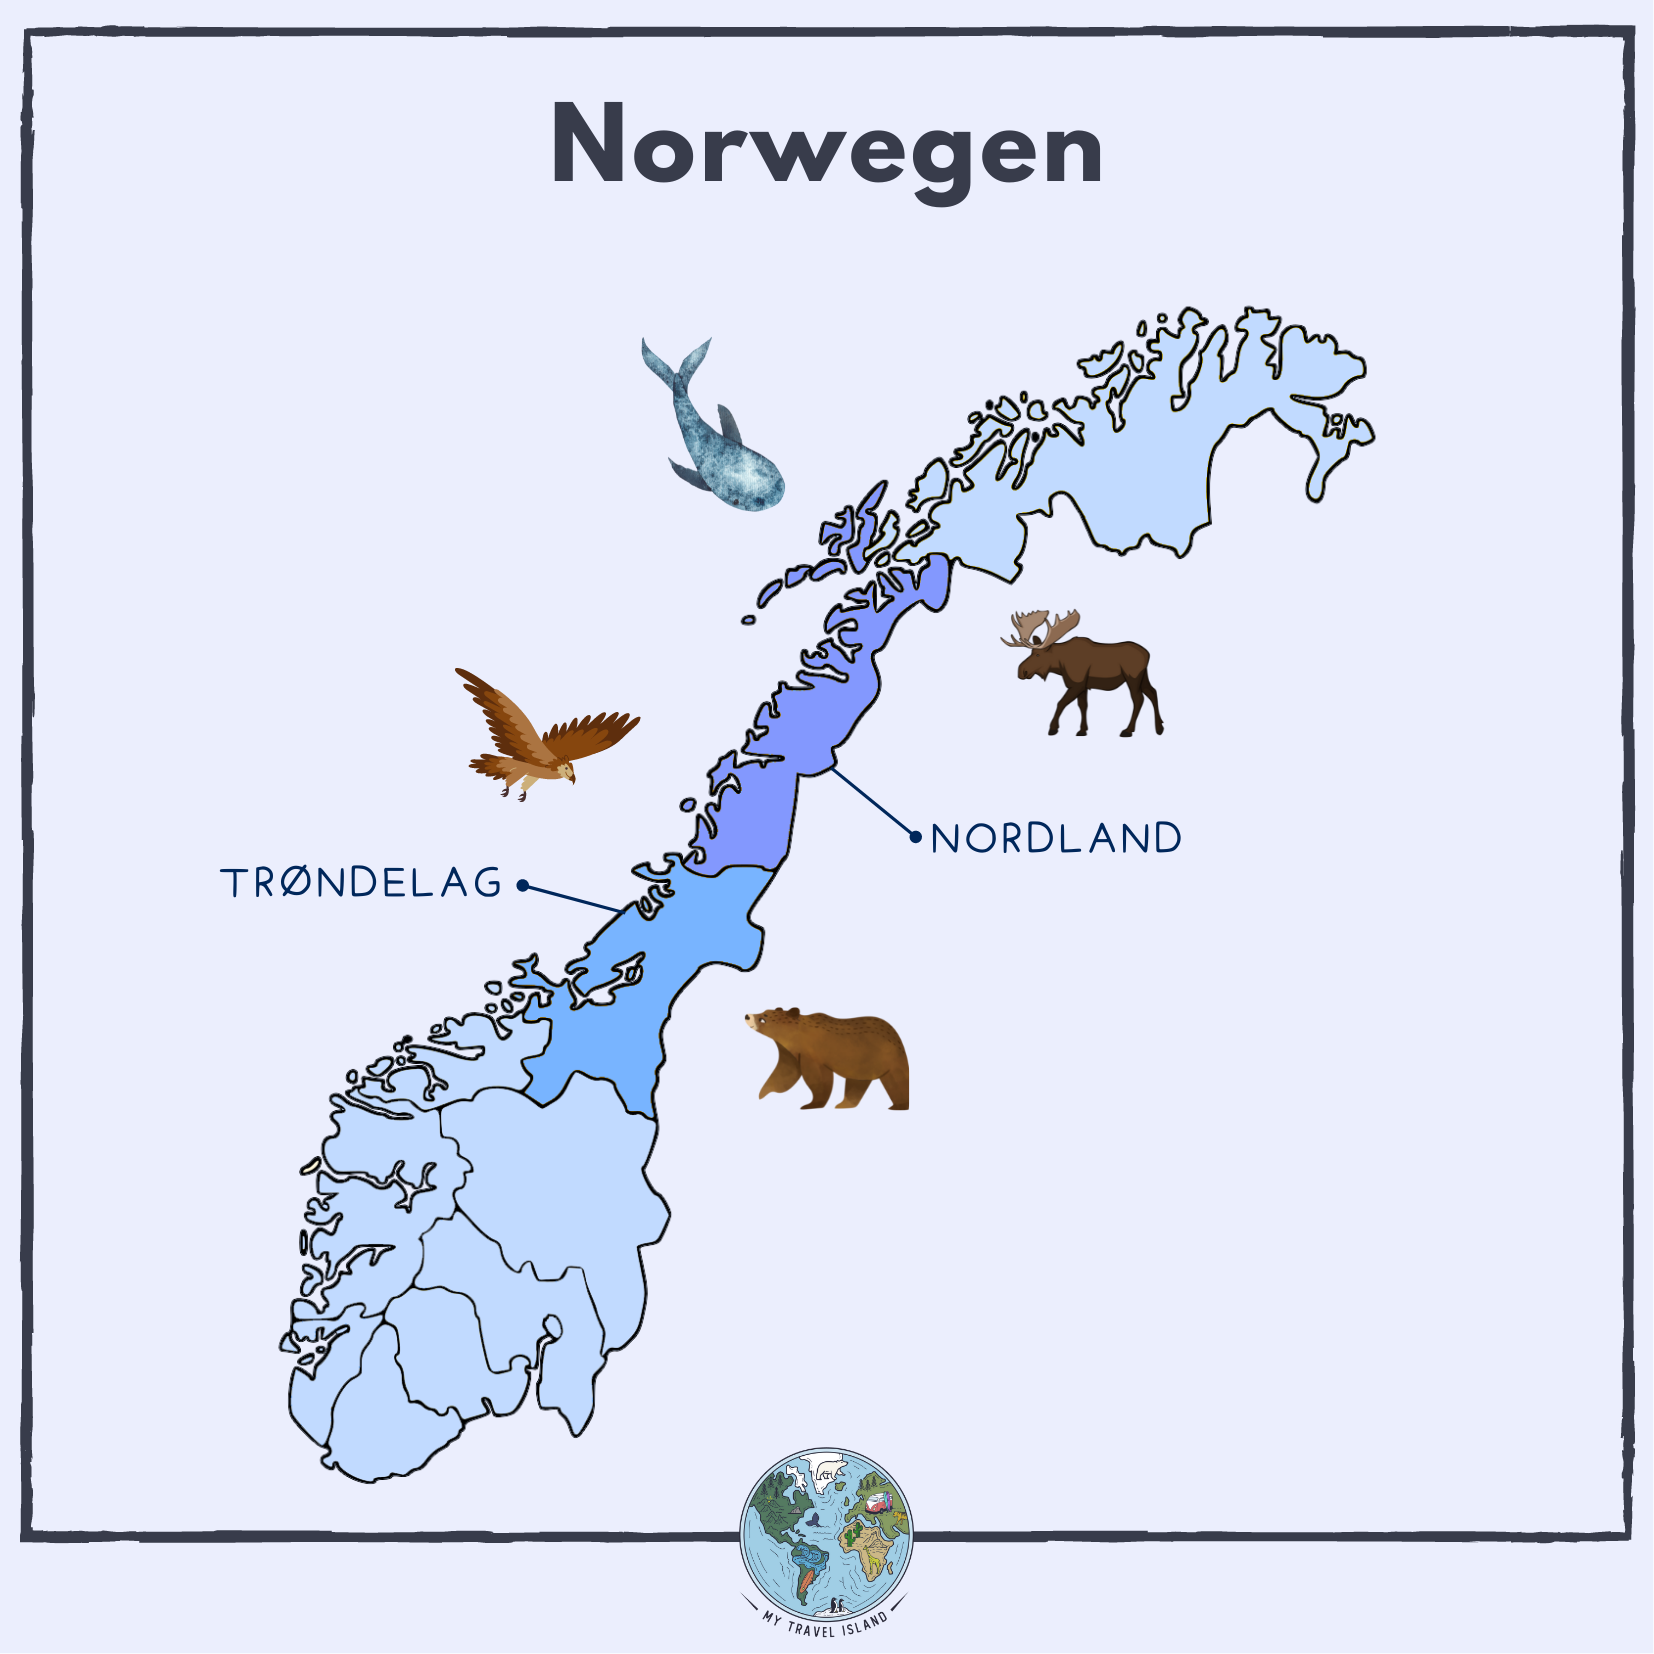 Nordnorwegen - Map
© Marielle Janotta - My Travel Island